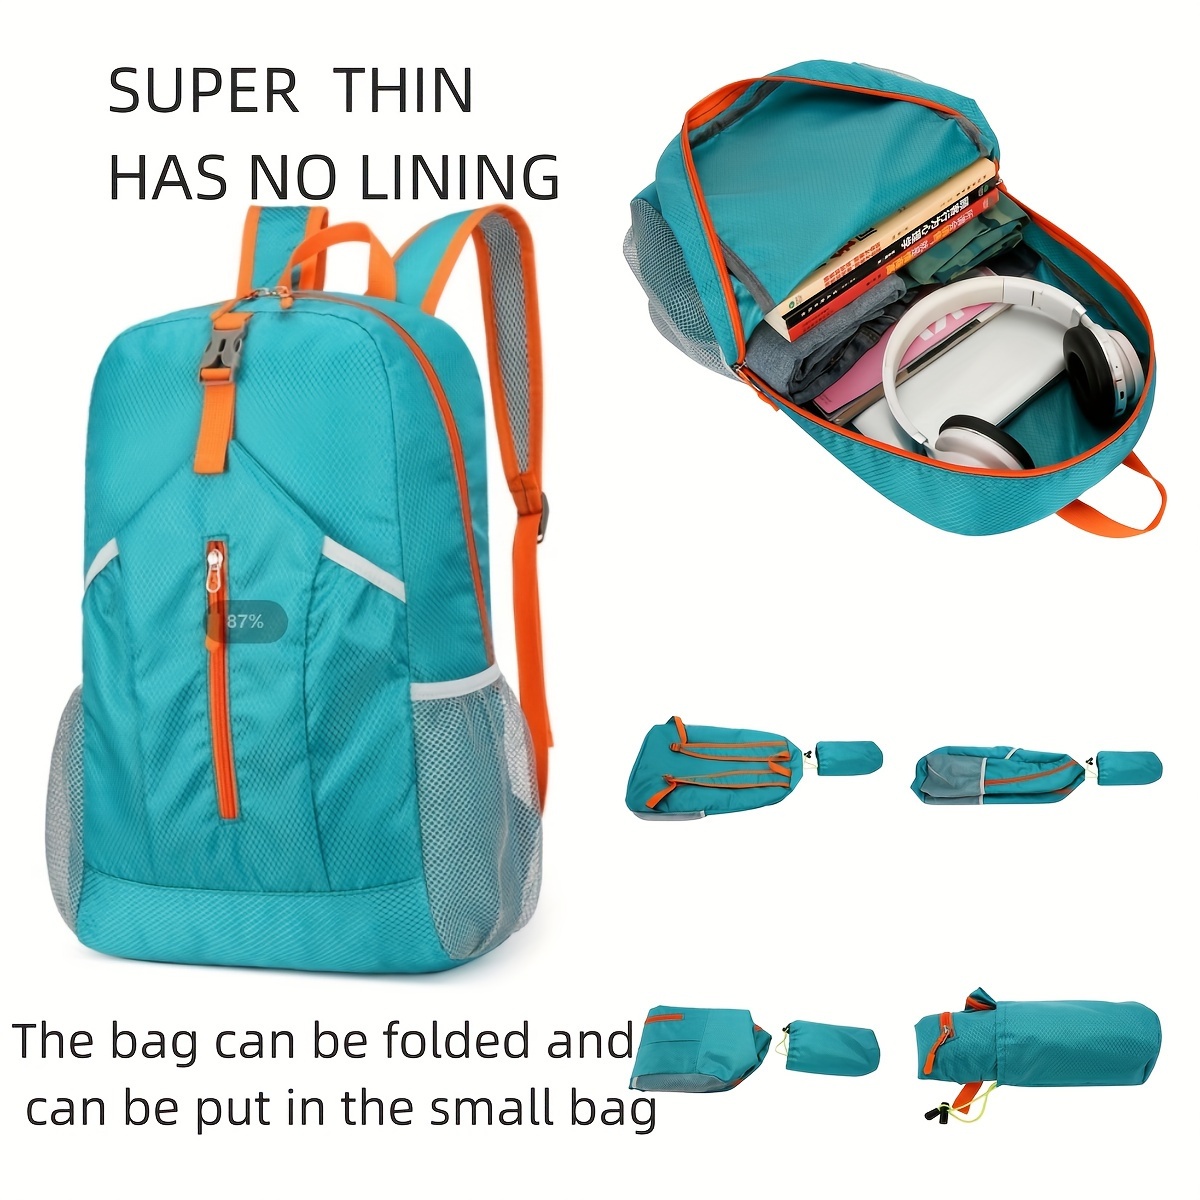 Mochila de viaje grande para mujeres, mochila de mano, mochila de  senderismo impermeable mochila deportiva al aire libre mochila casual  mochila escolar bag.c